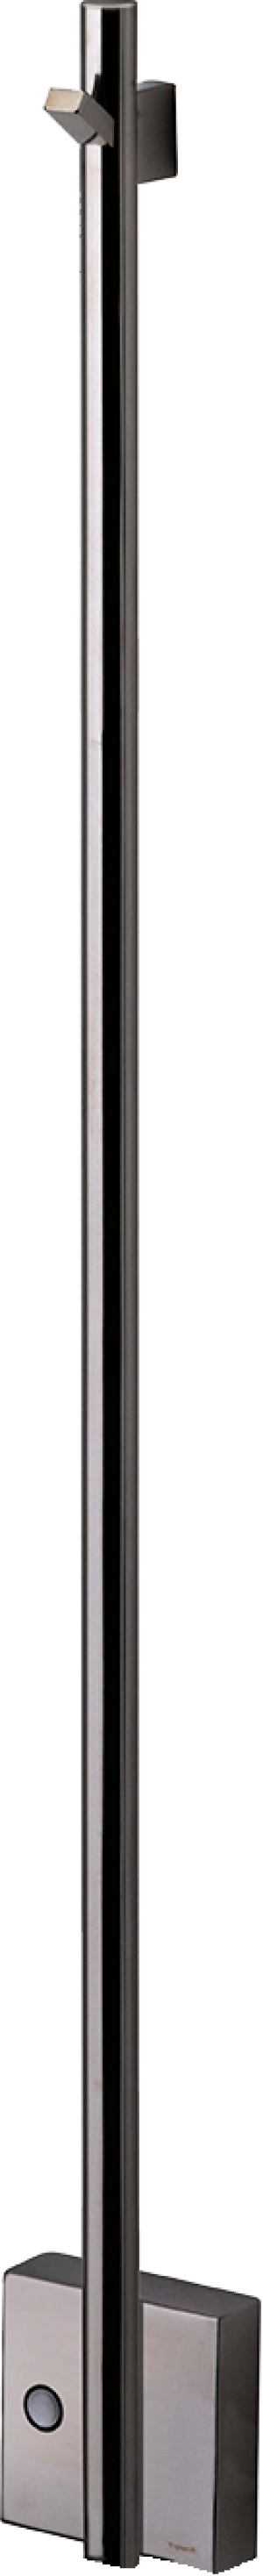 Tapwell Handdukstork TW750-85 Black Chrome